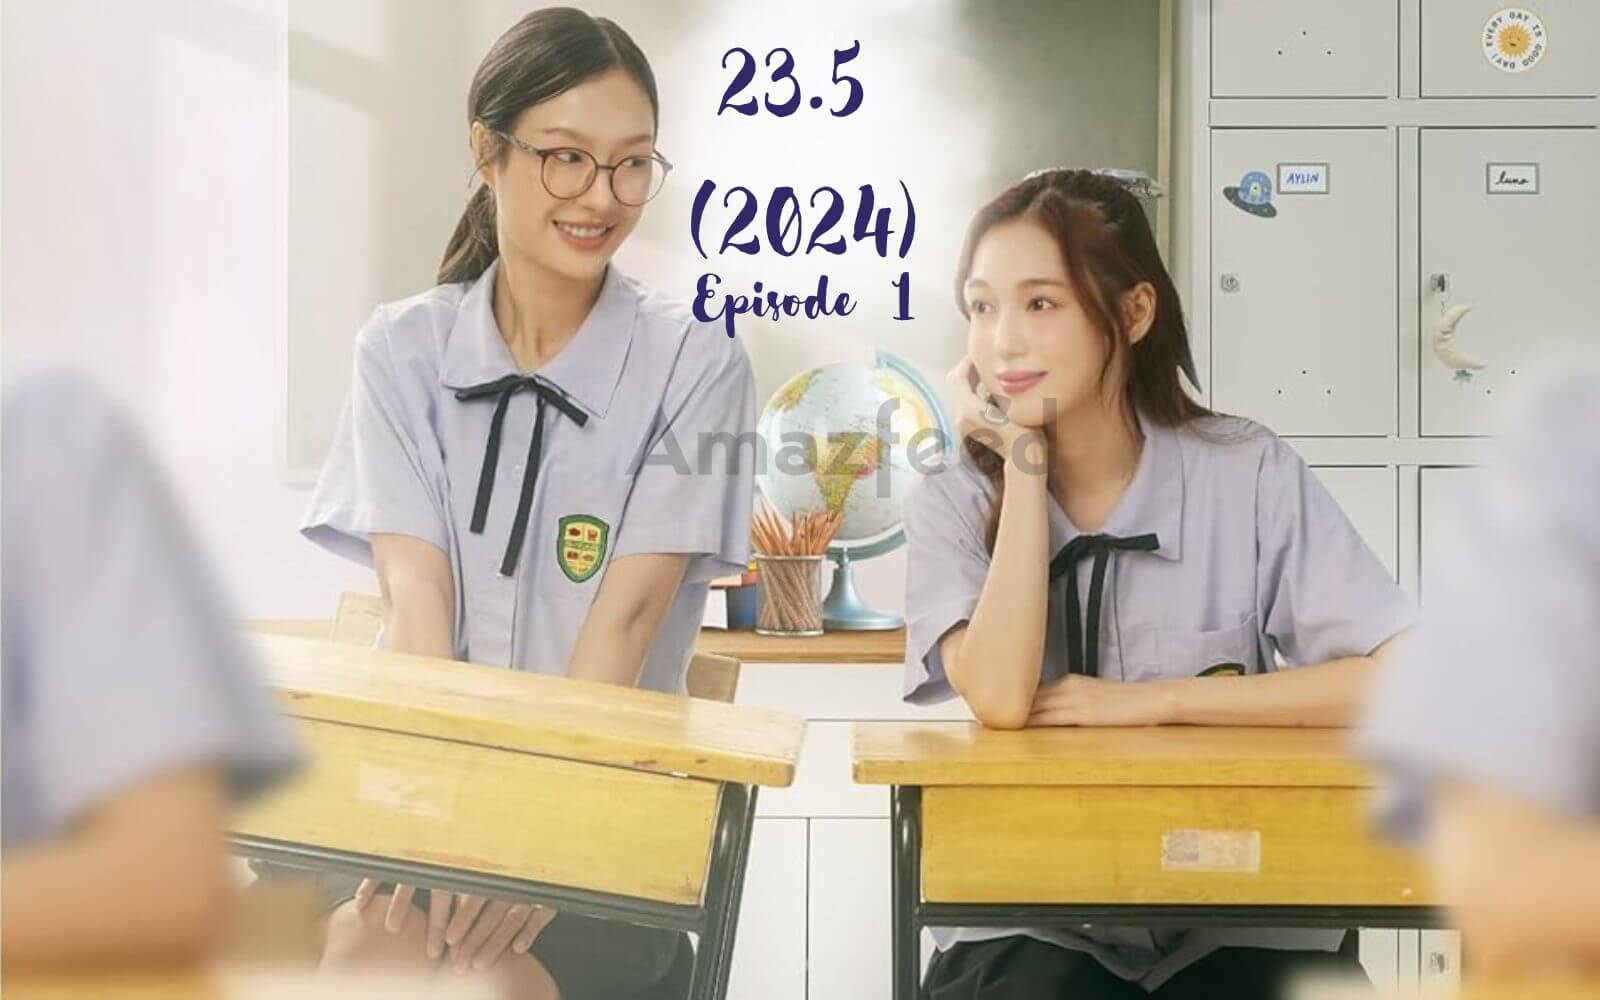 23.5 (2024) episode 1 release date